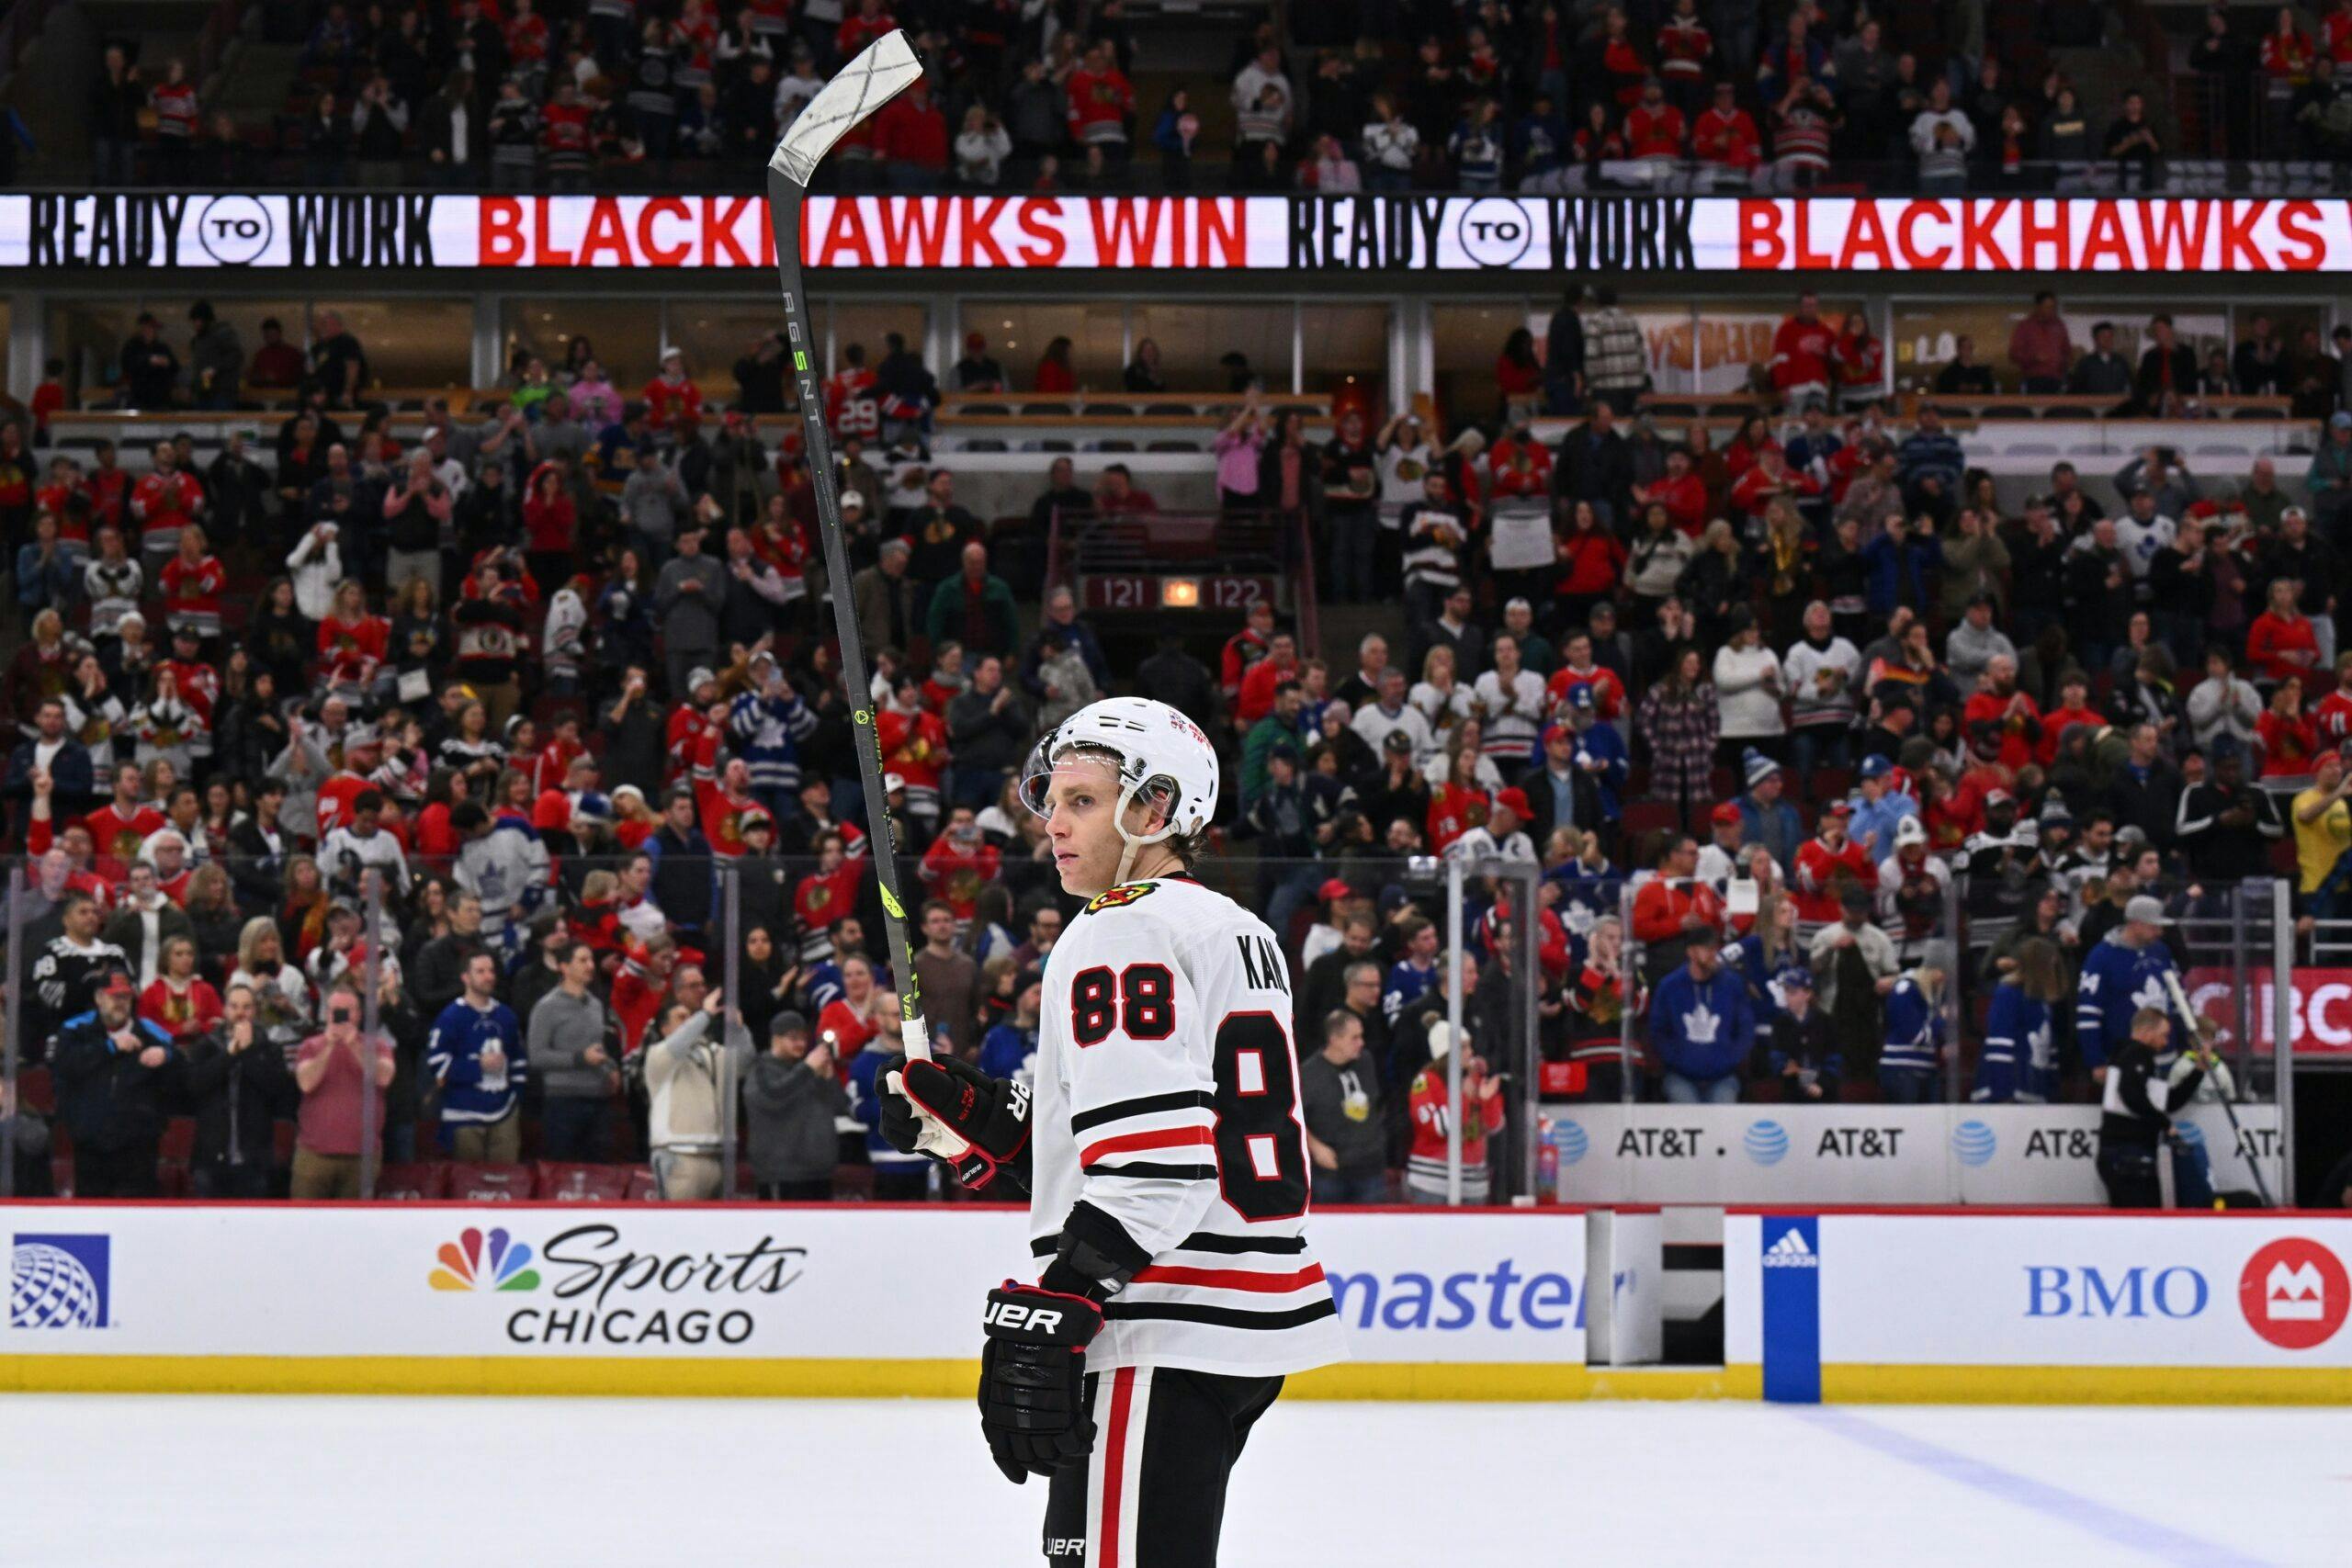 Chicago Blackhawks forward Patrick Kane records hat trick against Toronto Maple Leafs